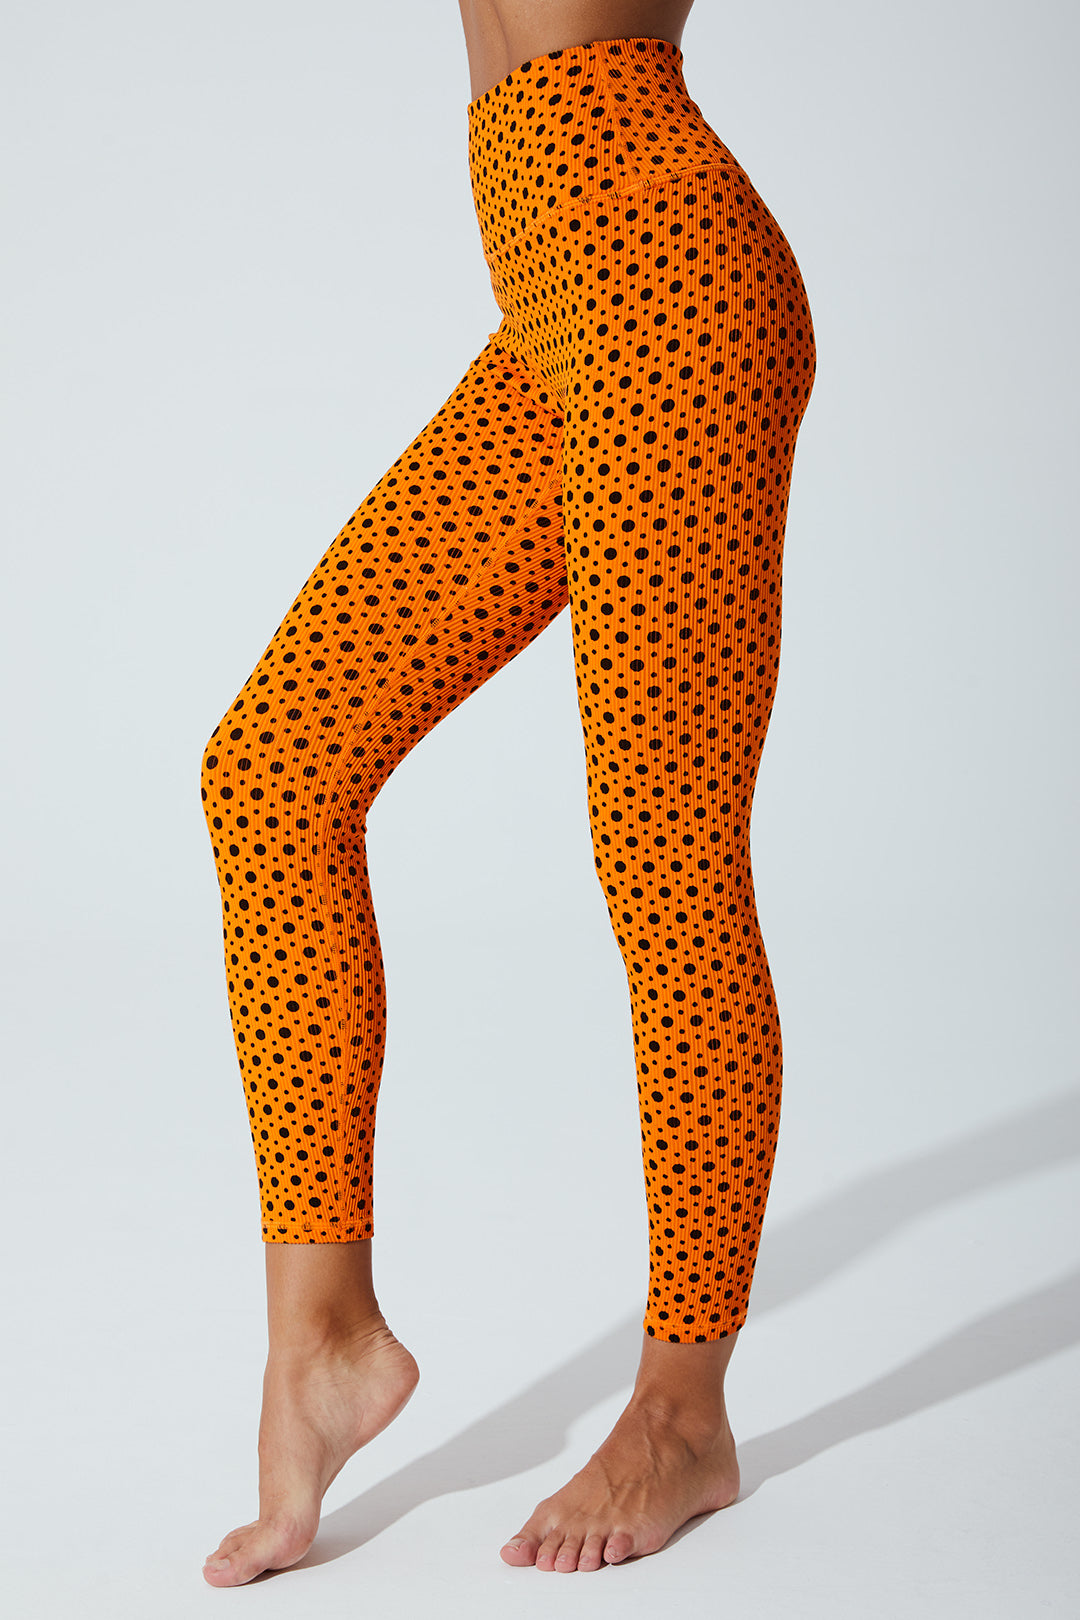 Vibrant orange polka dot leggings for women, featuring a playful beetle design - OW-0023-WLG-OR.